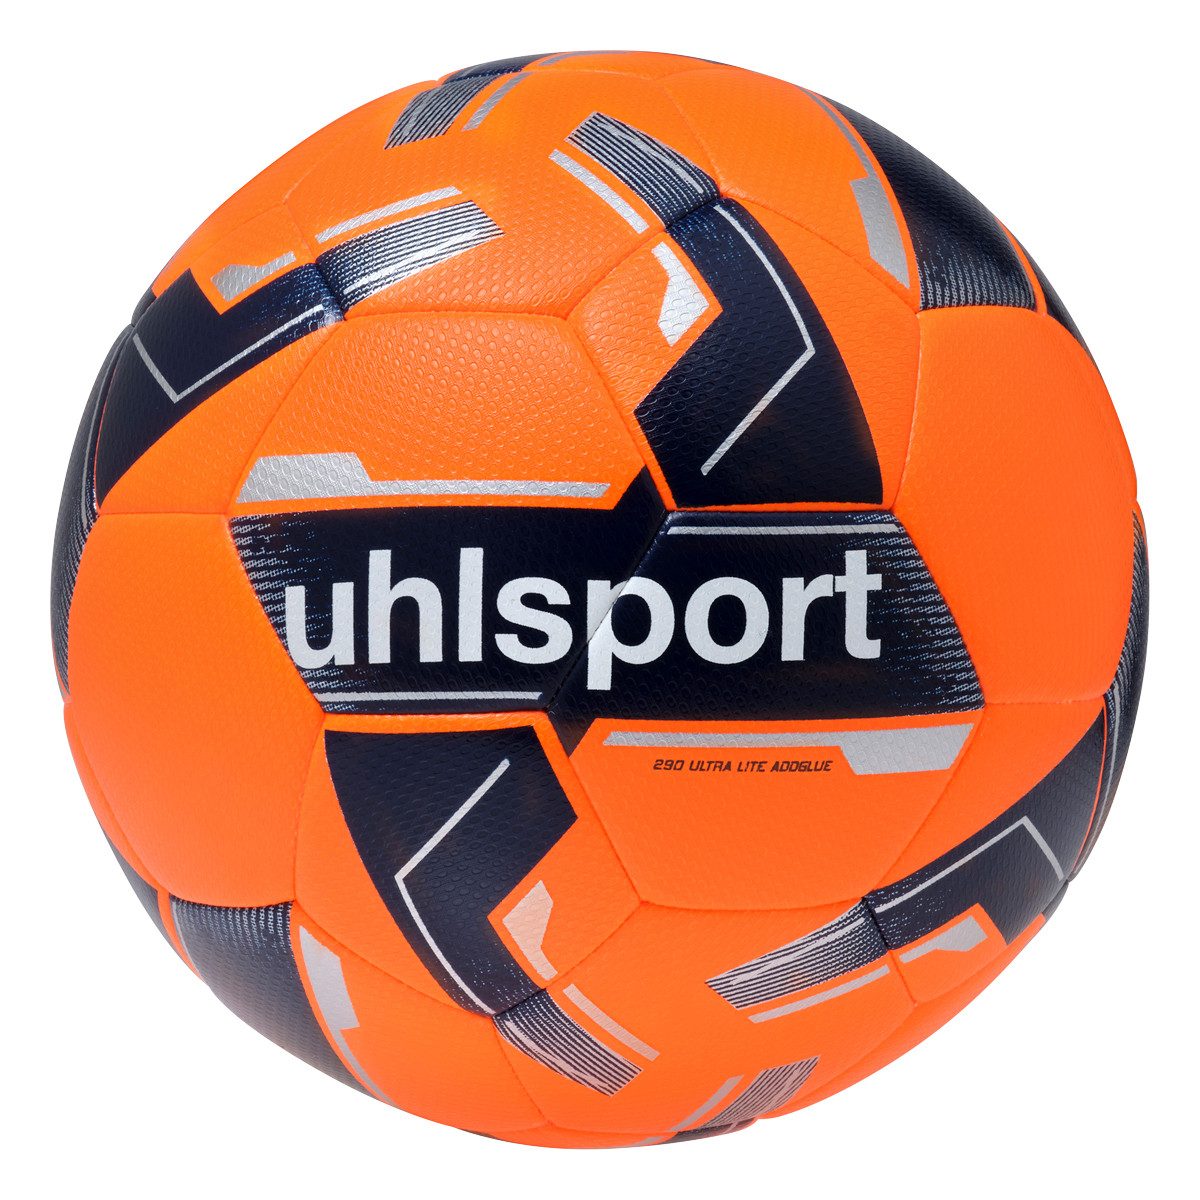 uhlsport Fußball 290 Ultra Lite Addglue